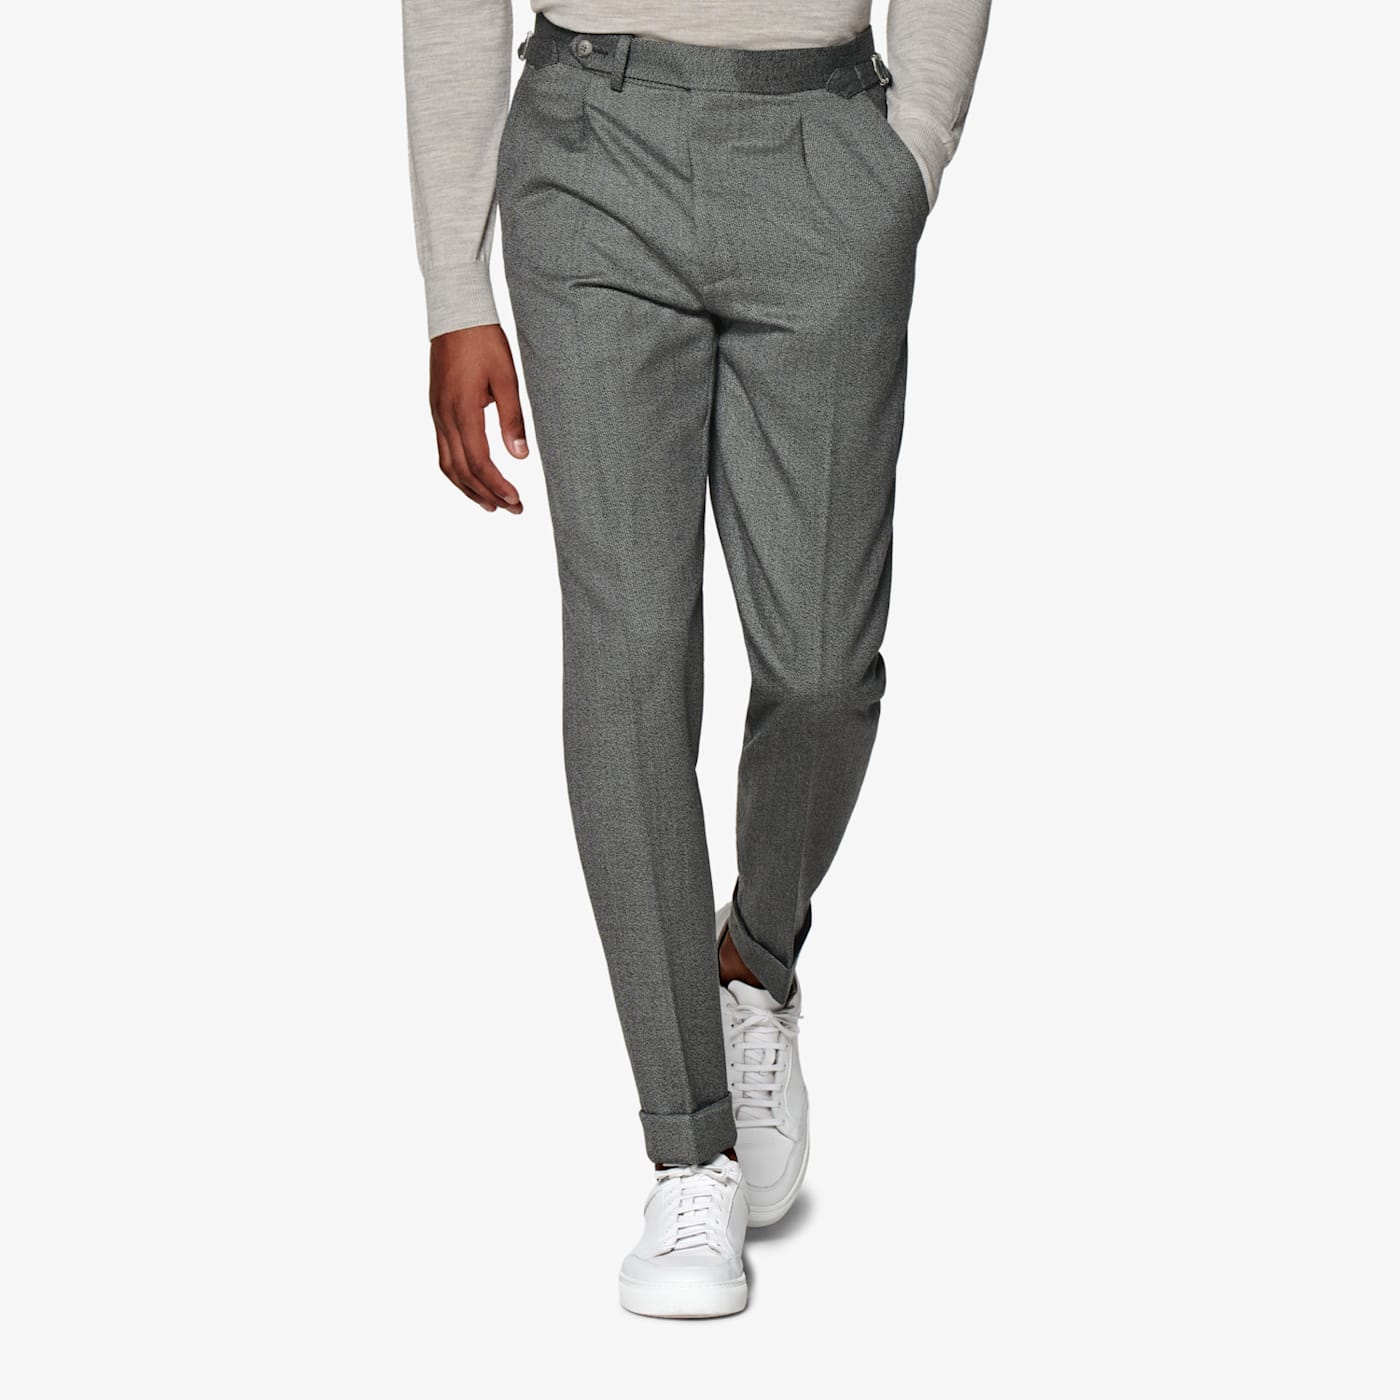 Light Grey Pleated Vigo Pants